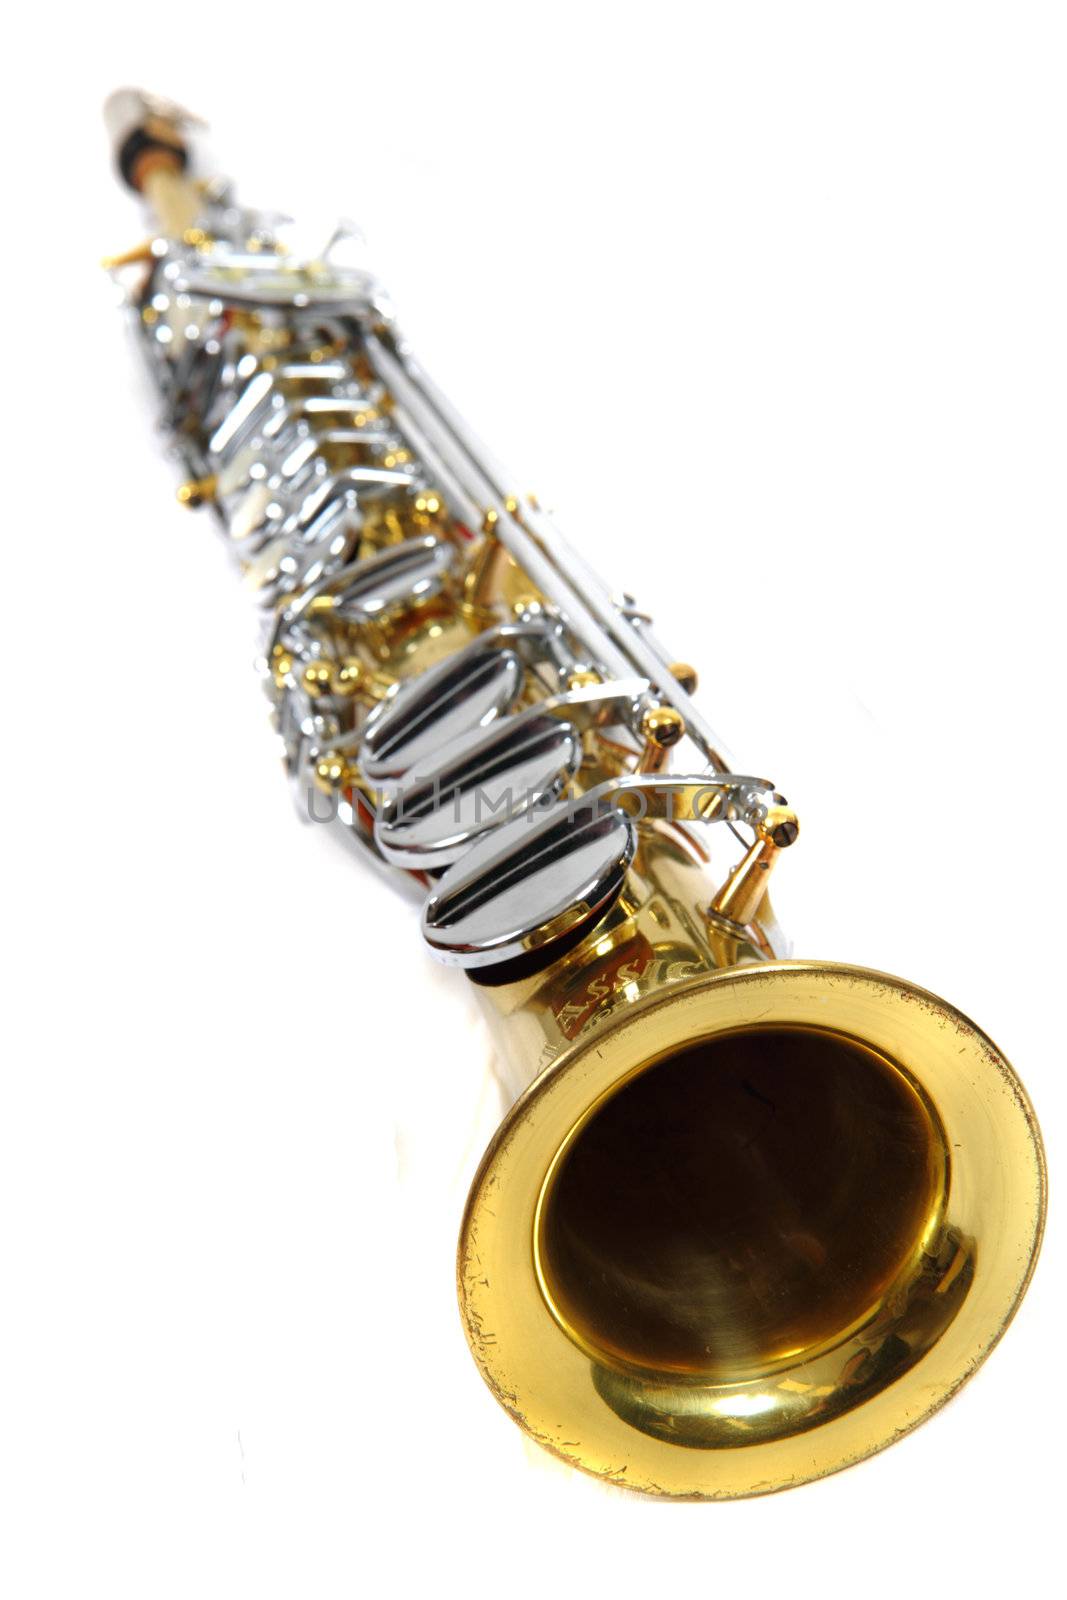 clarinet music instrument by jonnysek